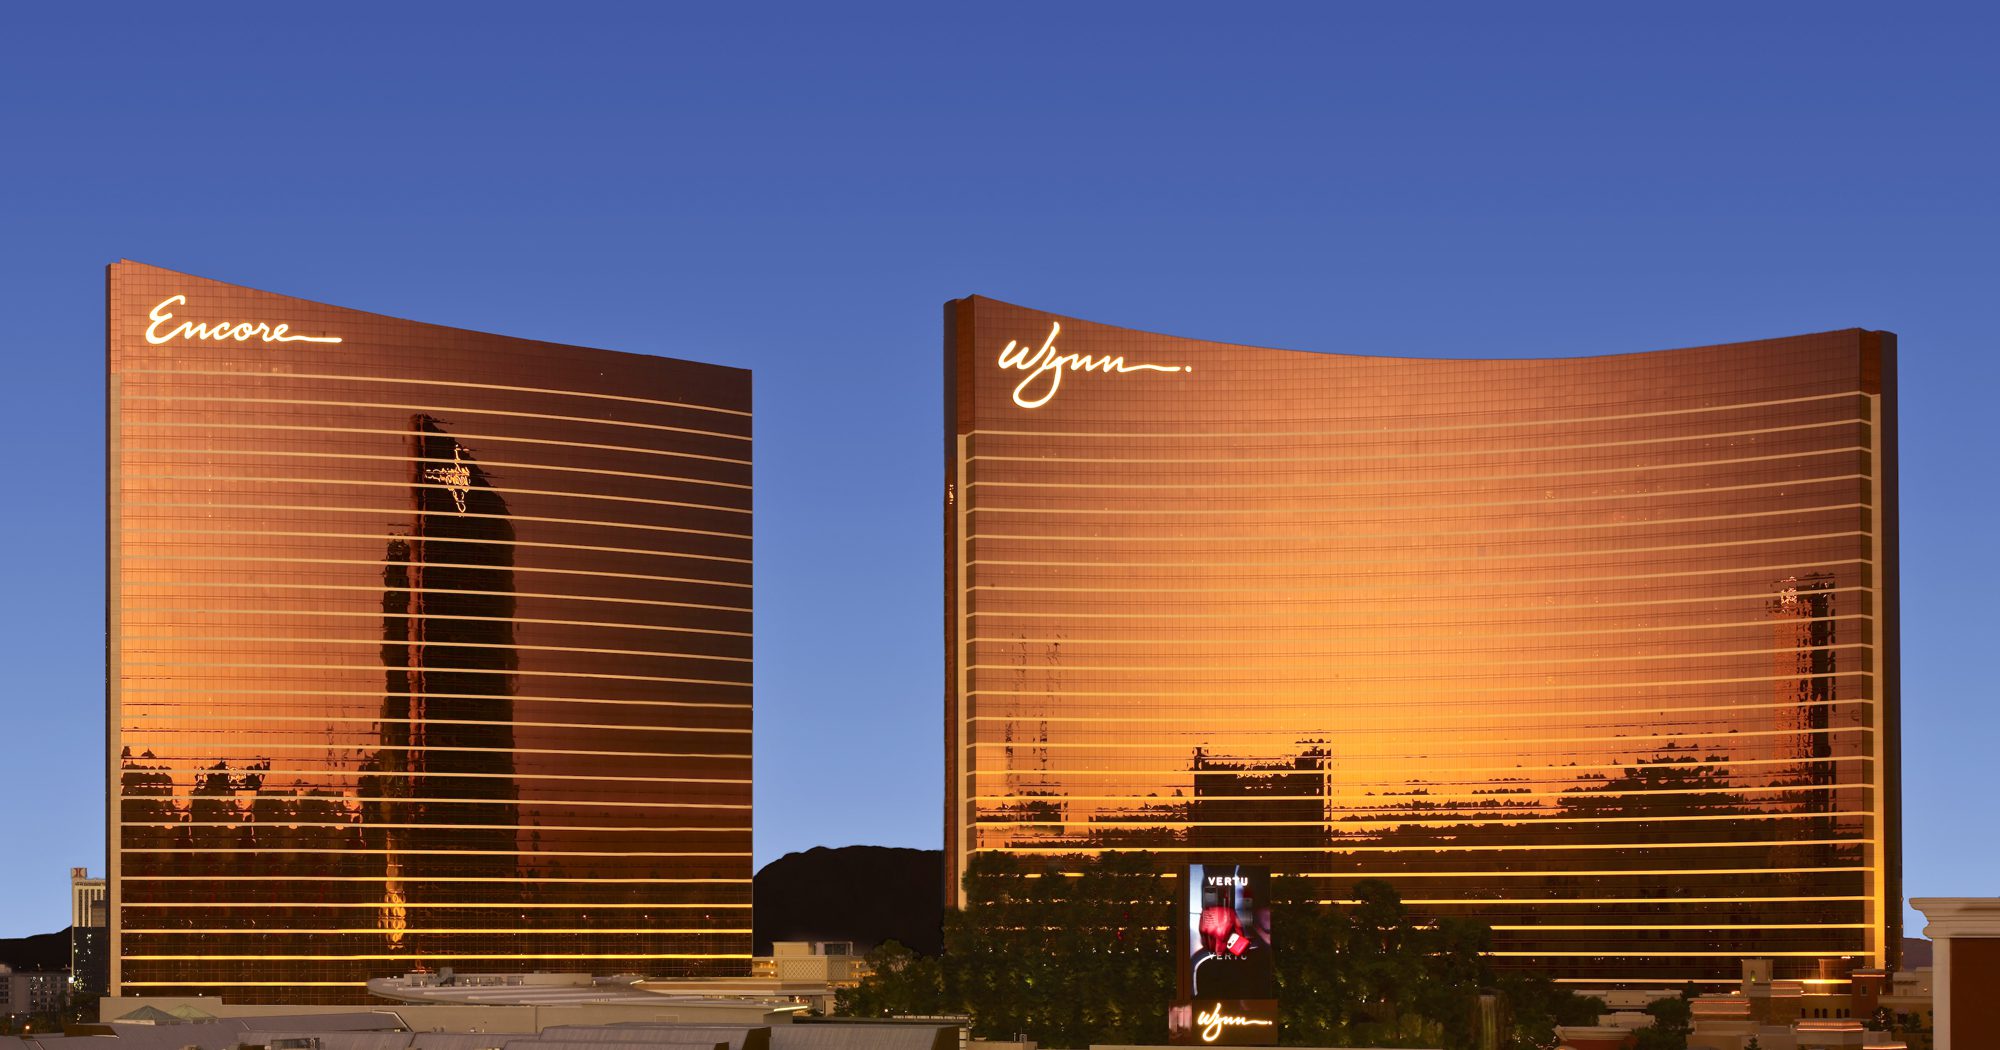 Steve Wynn Takes Us on a Video Tour of Wynn Las Vegas & Encore